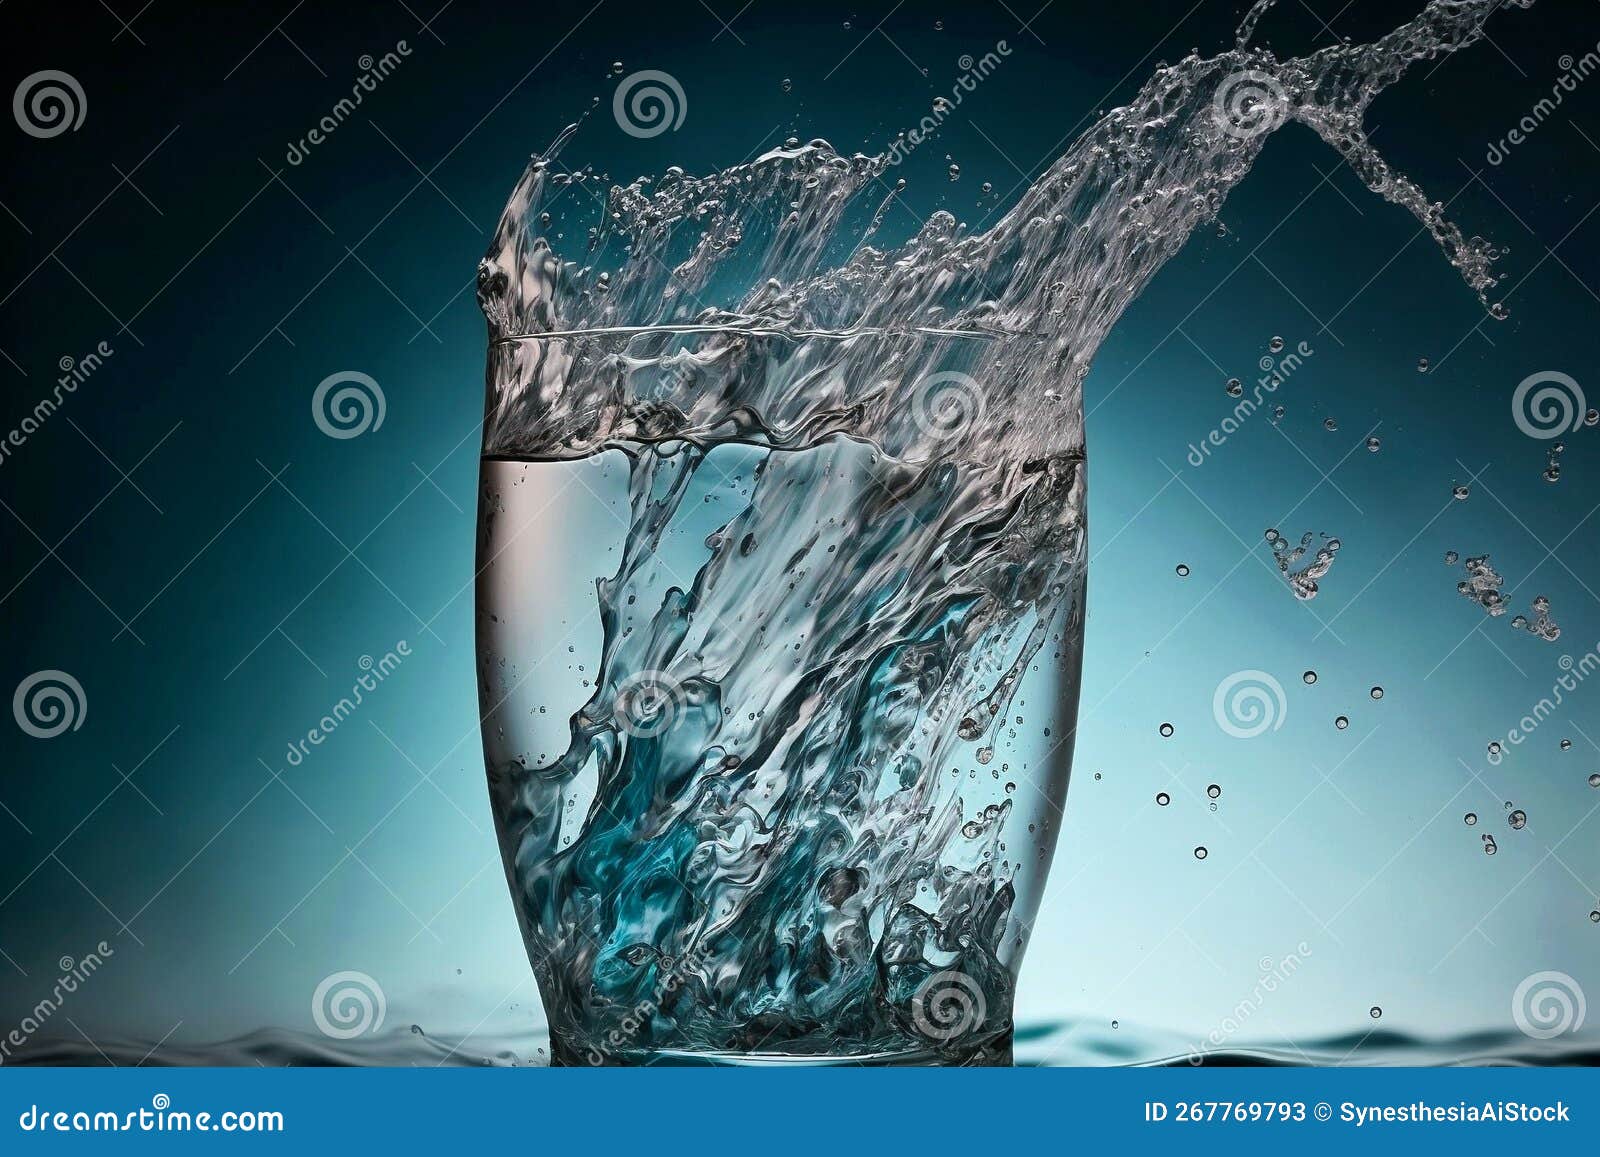 Splashing-glass-of-water